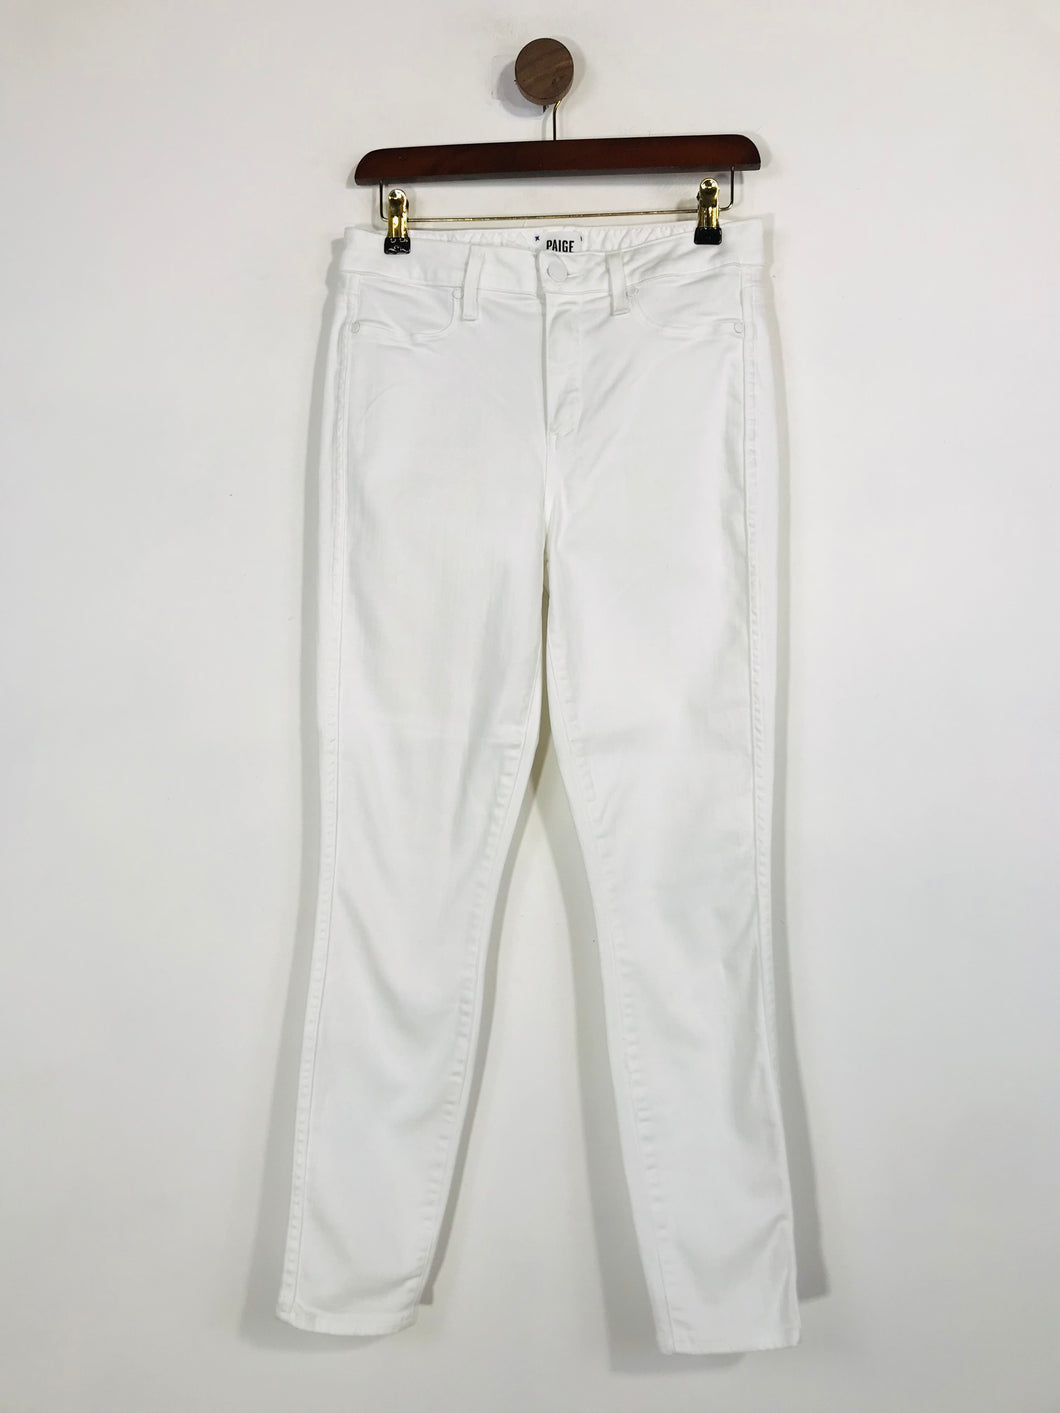 Paige Women's Crop Skinny Jeans | W29 UK10-12 | White